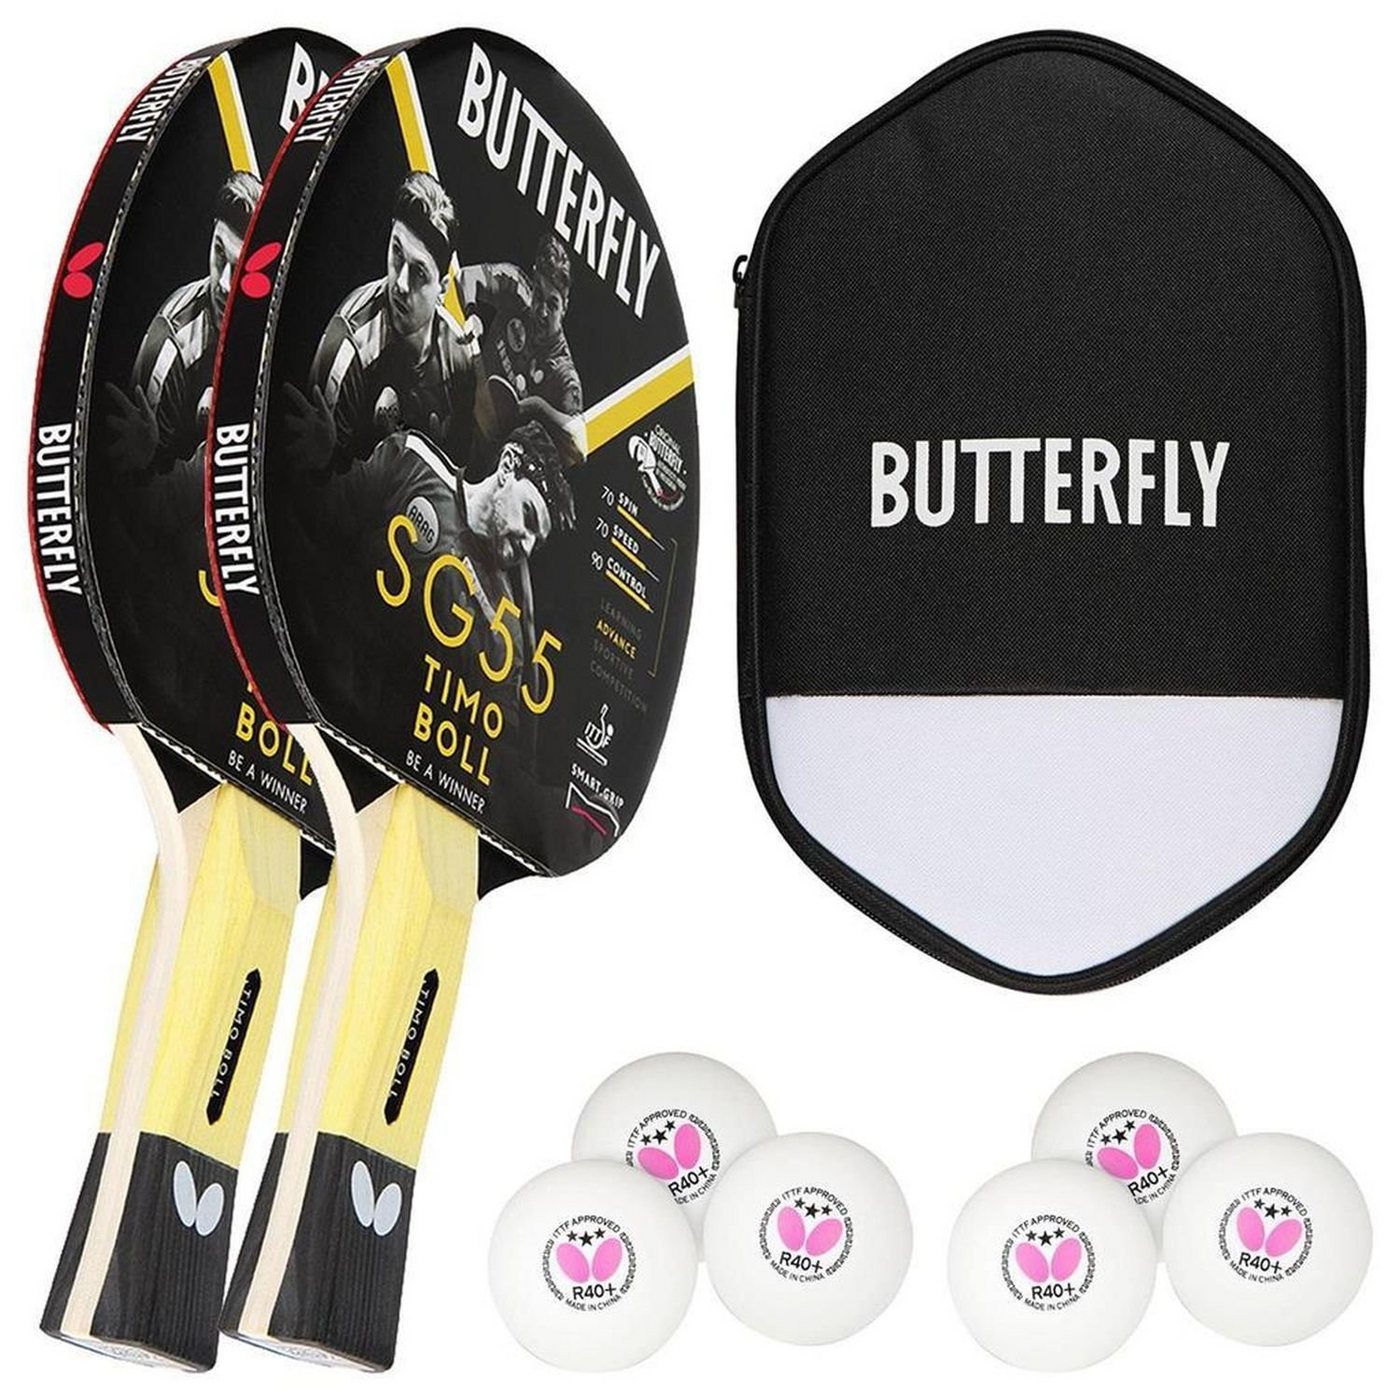 Butterfly Tischtennisschläger 2x Timo Boll SG55 + Cell Case + Bälle, Tischtennis Schläger Set Tischtennisset Table Tennis Bat Racket von Butterfly